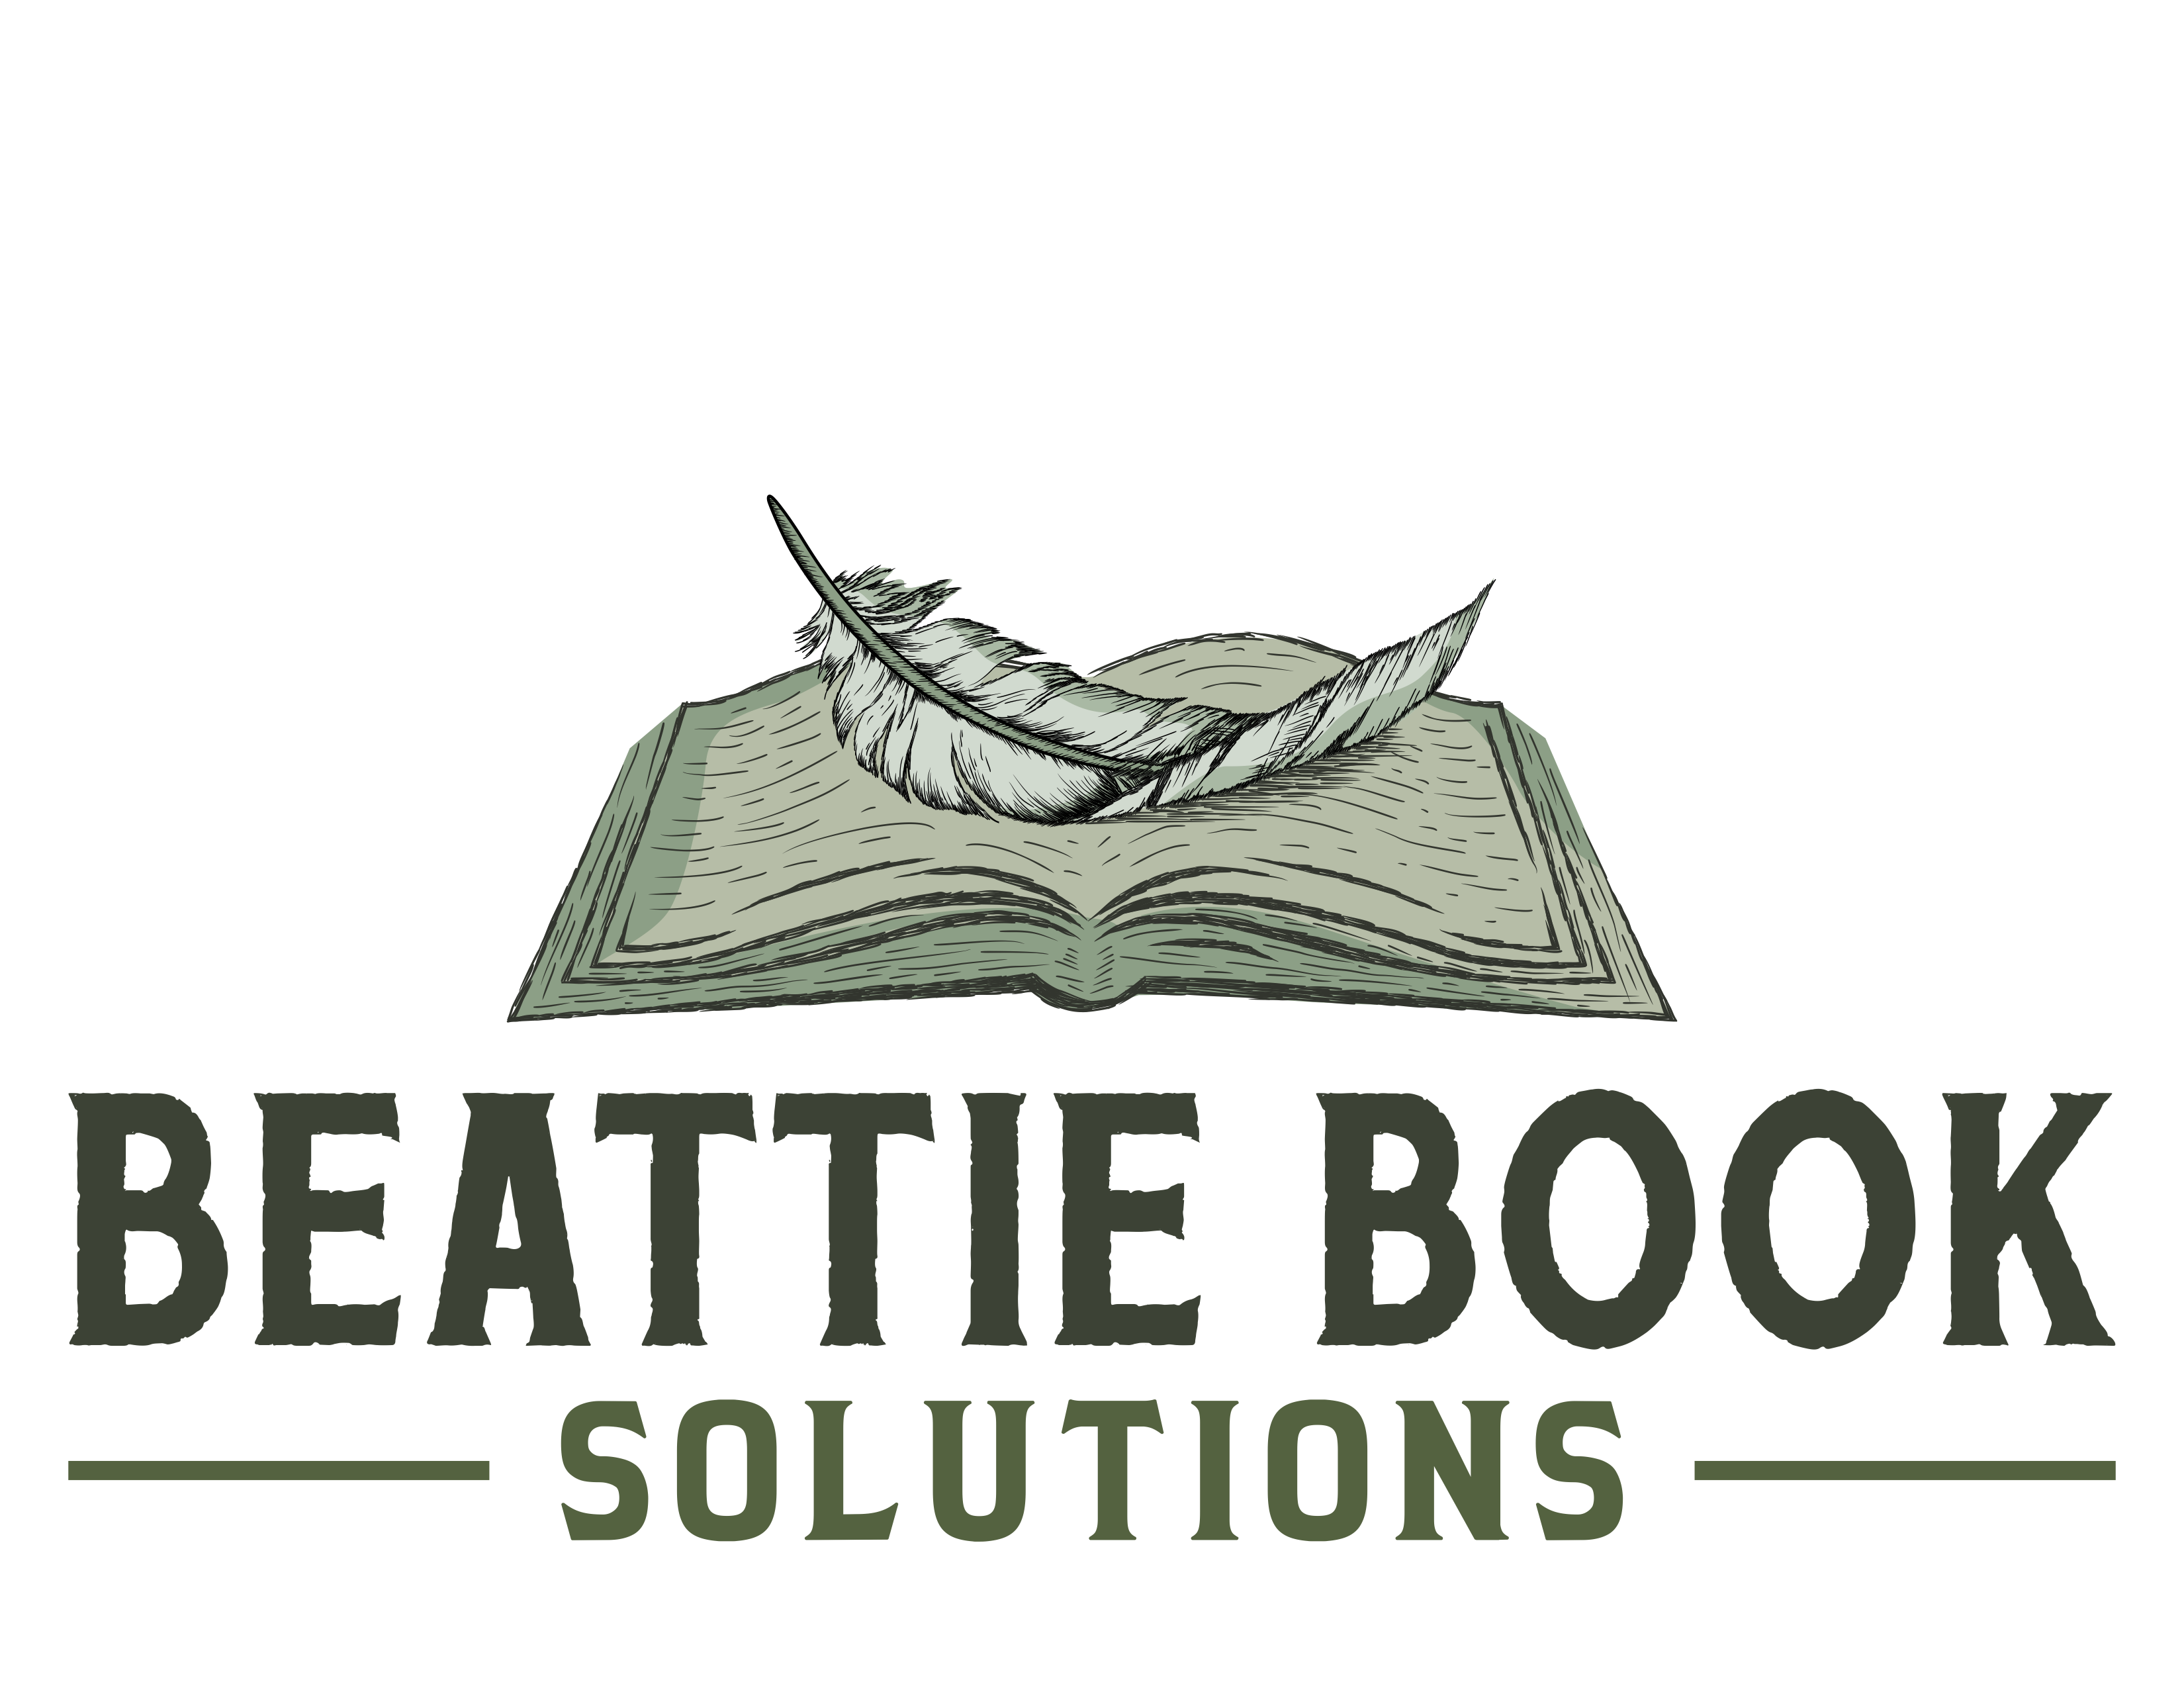 Beattie Book Solutions